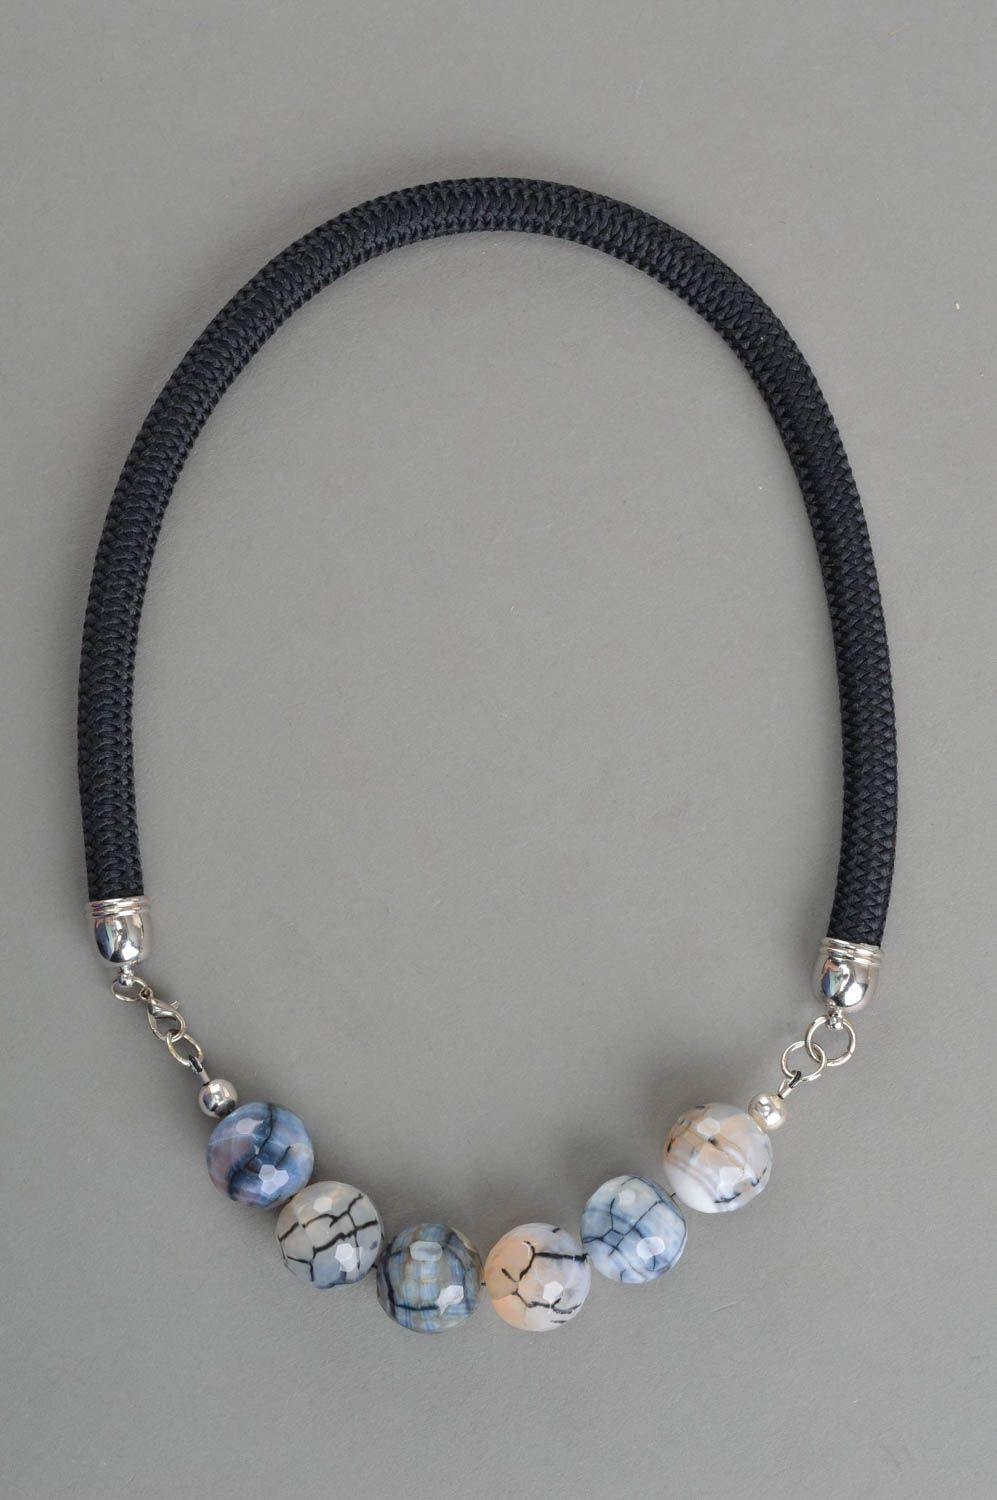 Handmade gemstone necklace designer accessories fashionable jewelry gift idea photo 2